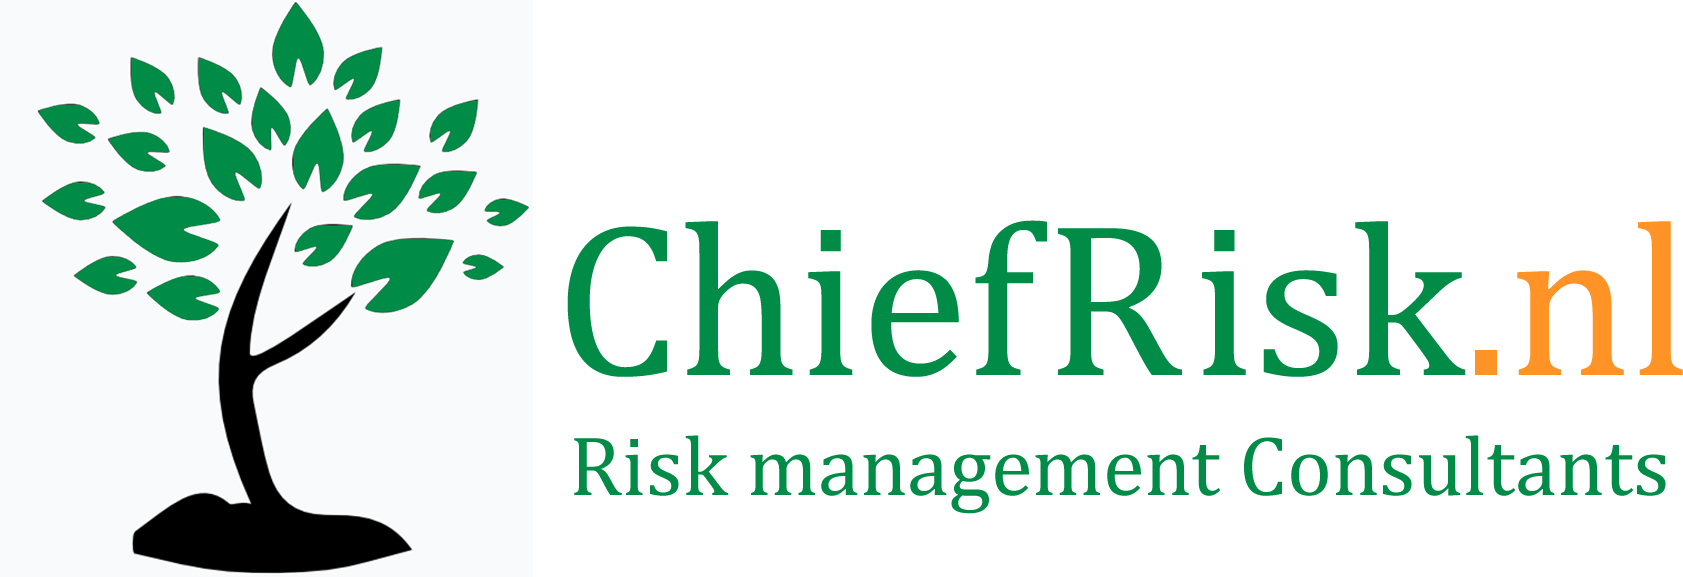 ChierRisk - Risk management Consultants